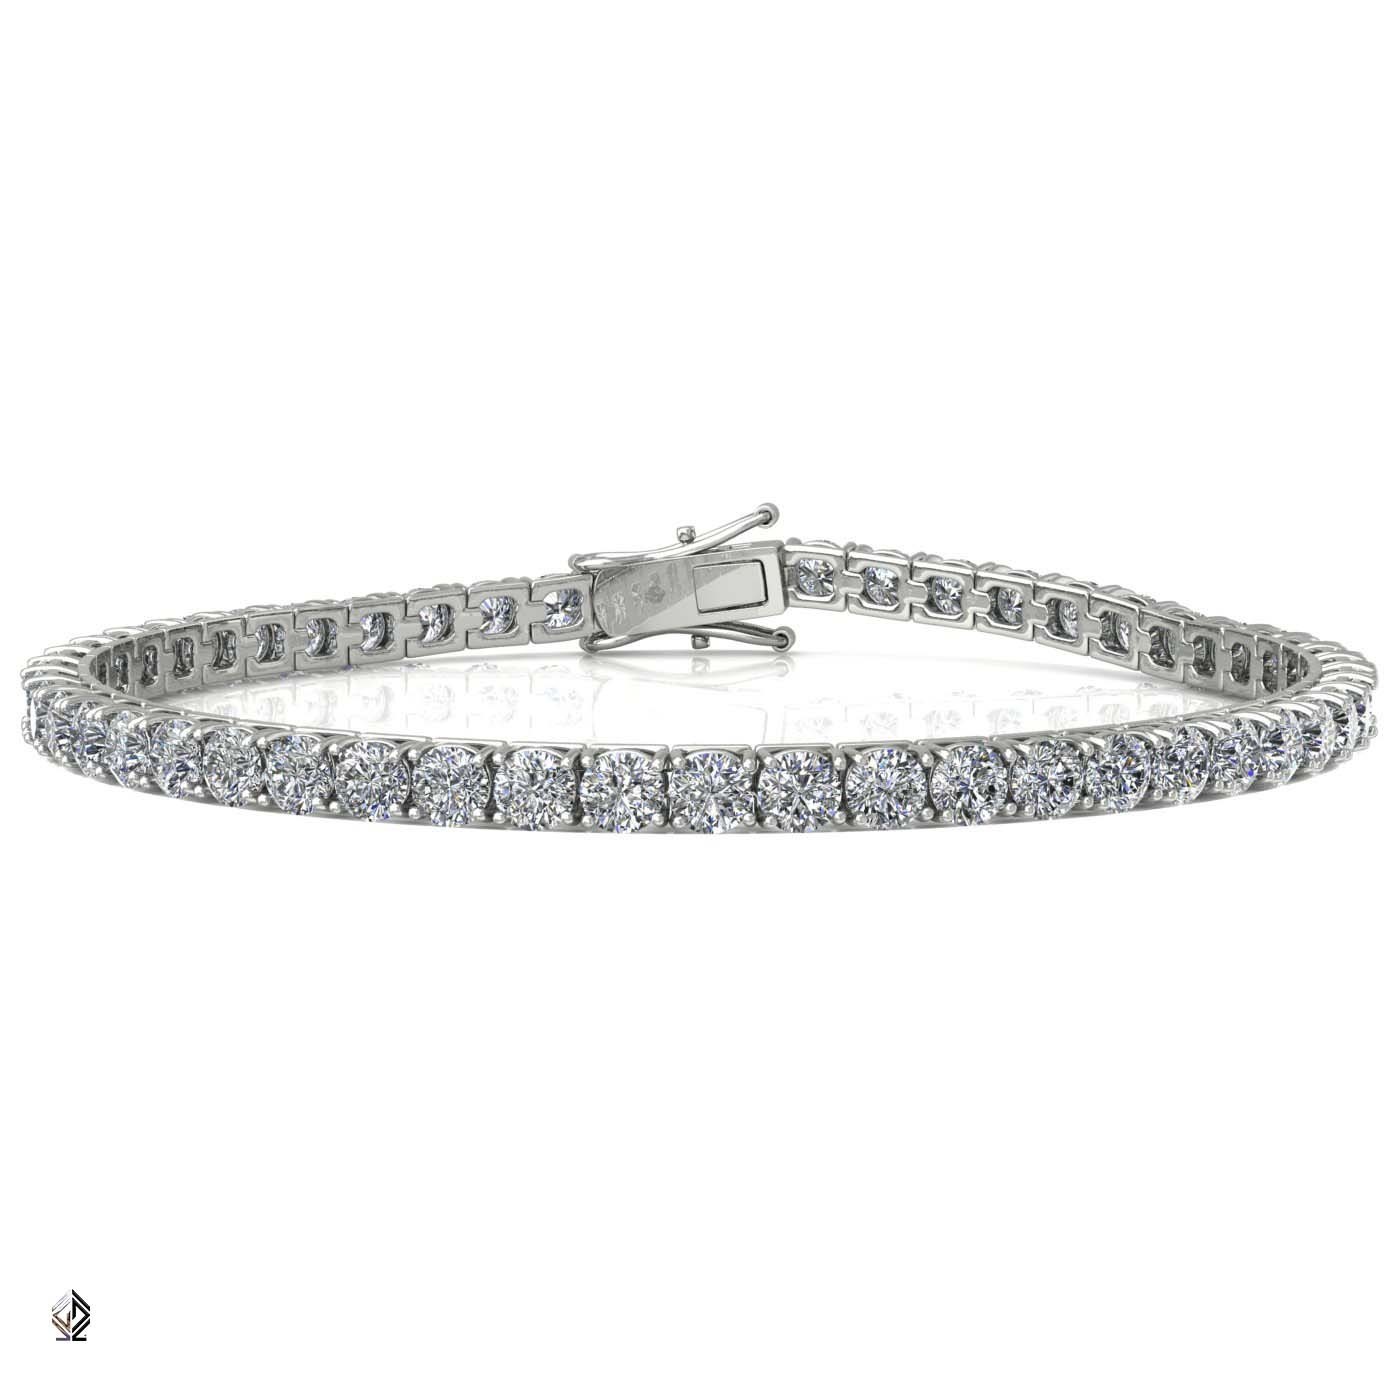 18k white gold 3.0mm 4 prong round shape diamond tennis bracelet in square setting